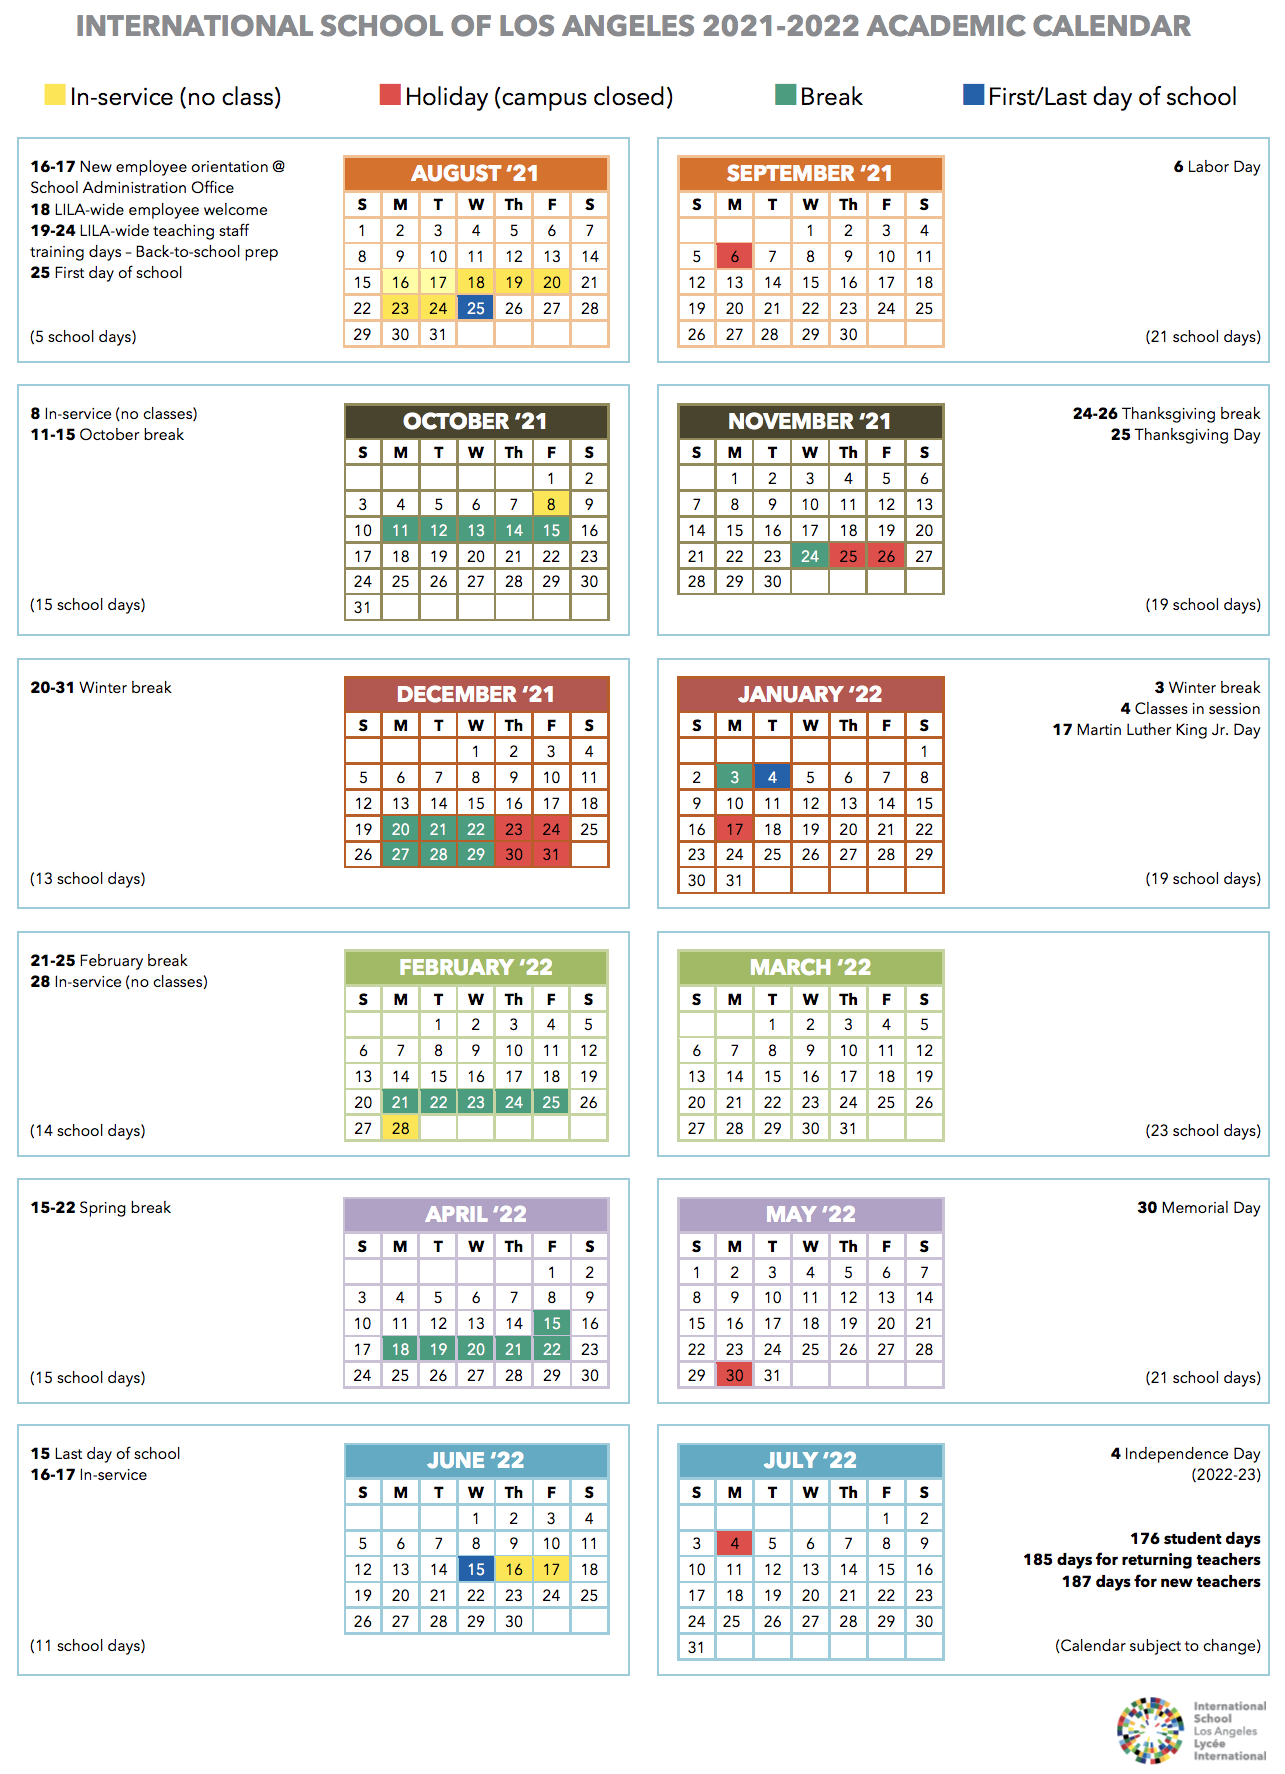 Csulb Spring 2022 Calendar Calendar | International School Of Los Angeles